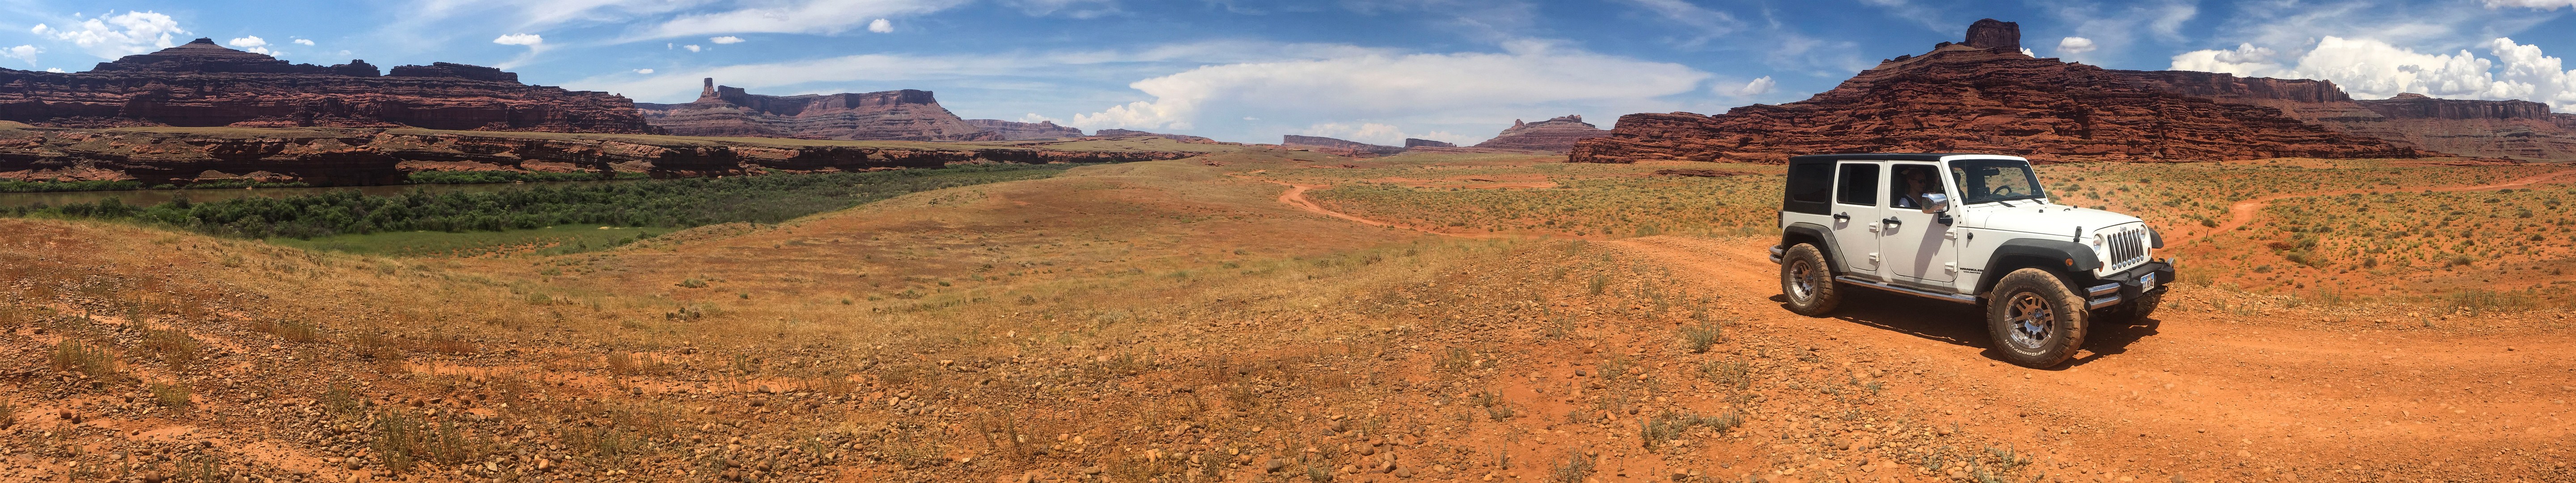 desert, Rocks, Sand, Car, Grass, Mountains, Sky, Panorama, USA, North America Wallpaper